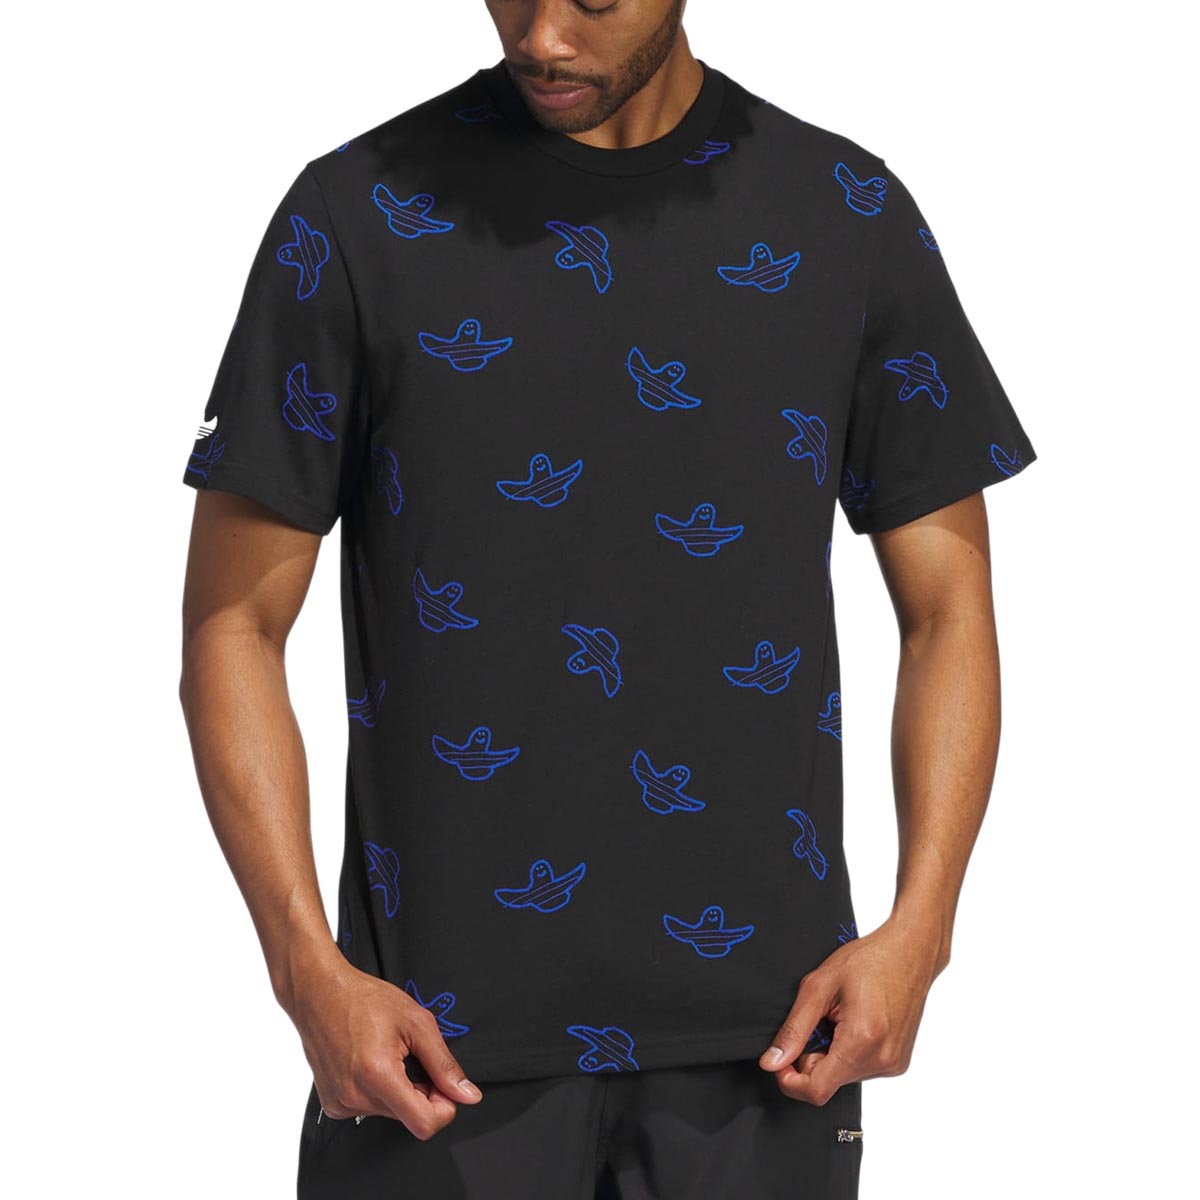 Adidas Shmoofoil All-Over-Print T-Shirt - Black/Royal Blue image 2